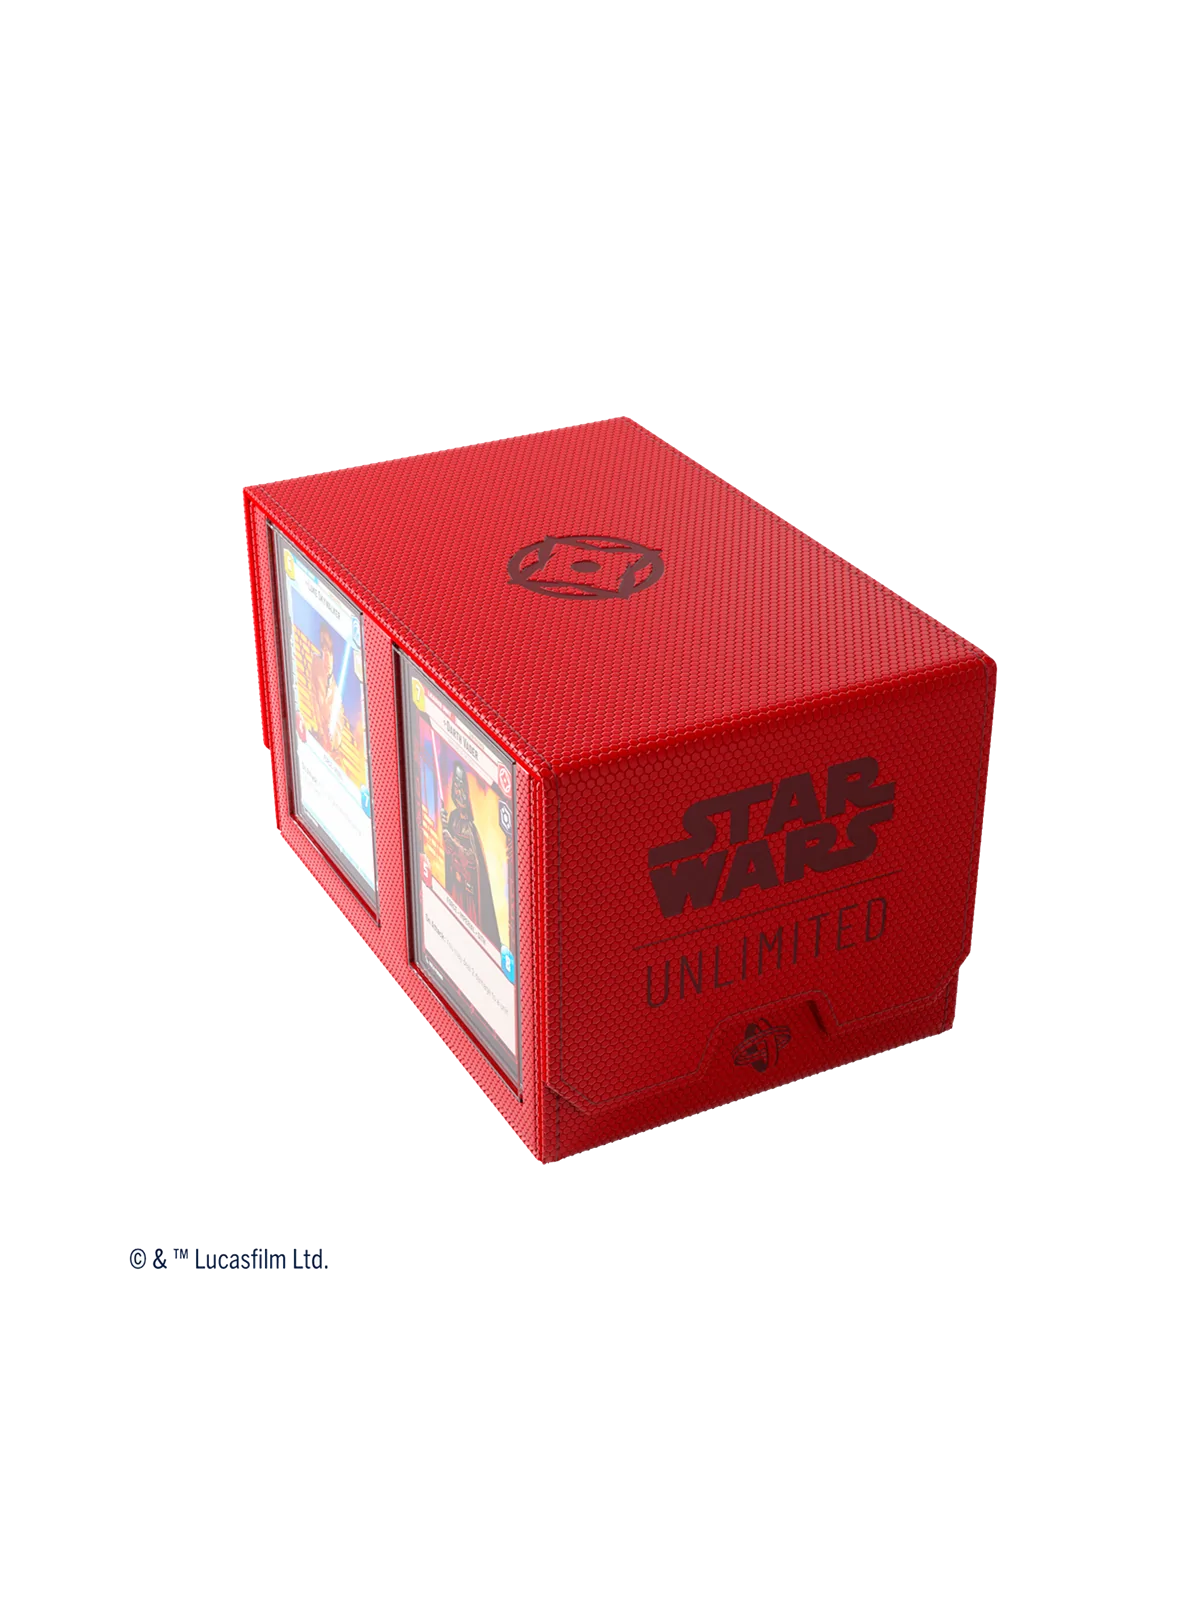 Comprar Star Wars: Unlimited Double Deck Pod Red barato al mejor preci